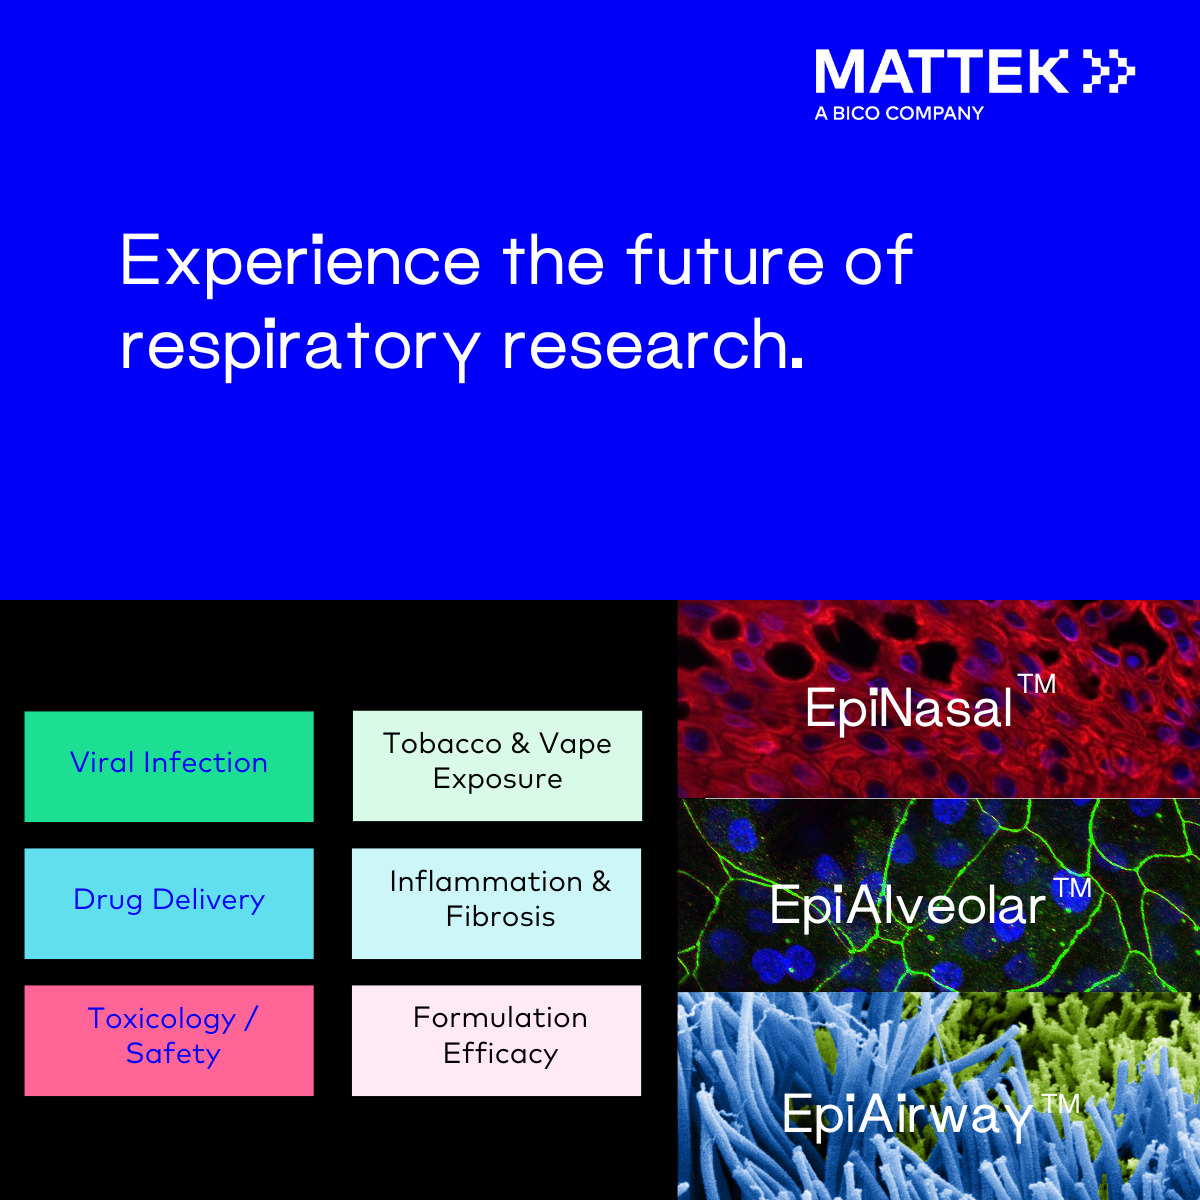 What Makes MatTek the Leader in 3D Respiratory Tissue Models for Drug Delivery?